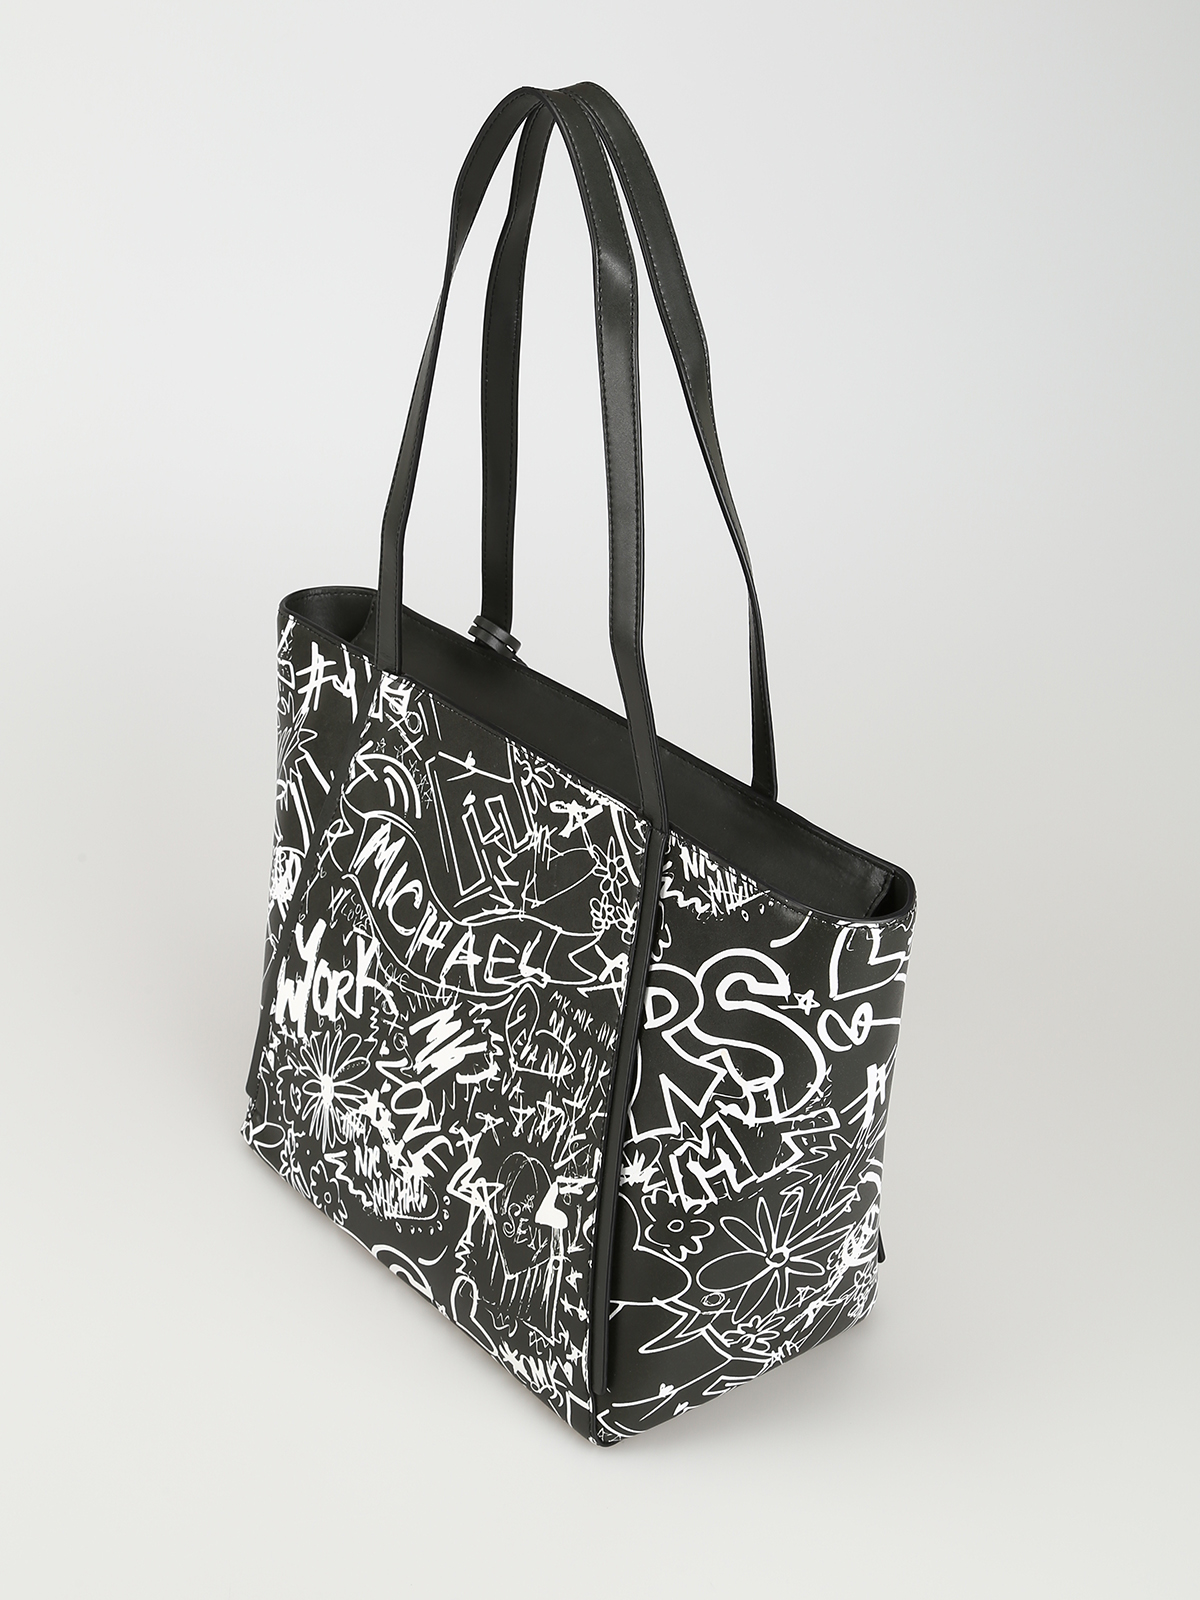 michael kors black and white tote bag